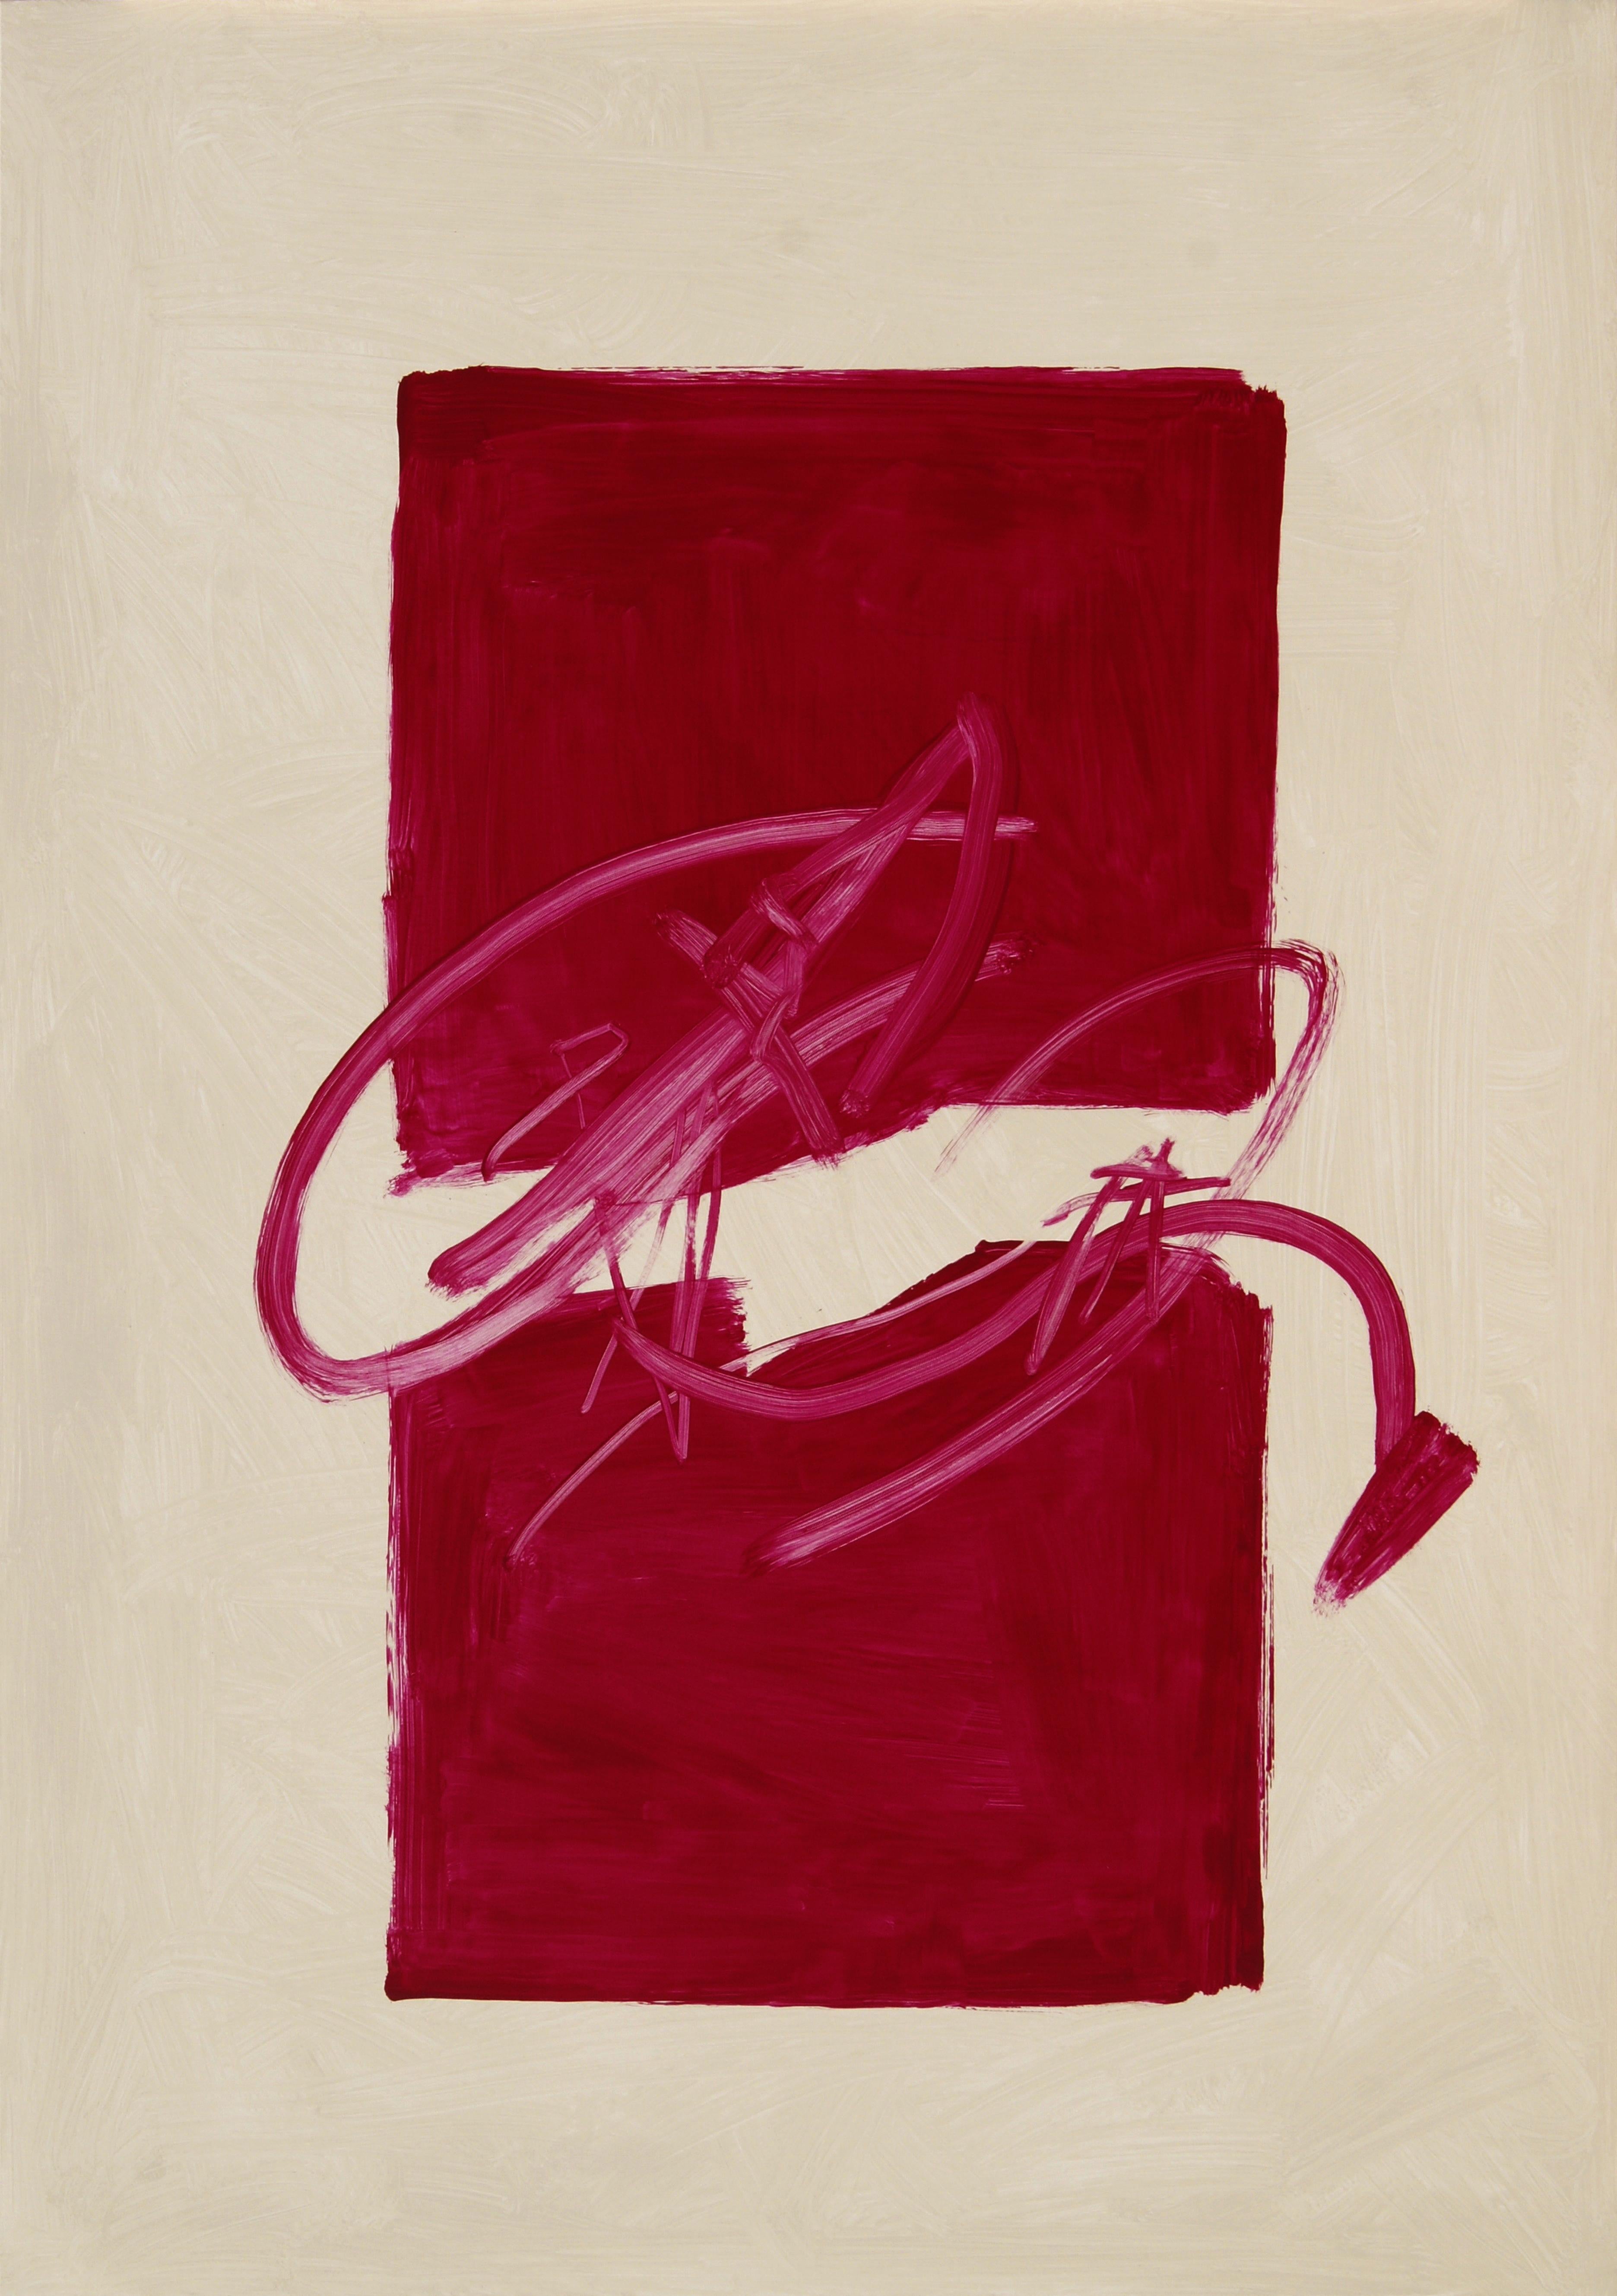 Ruz  Heller Hintergrund  Rot  Senkrecht  Großes abstraktes Gemälde in Acryl auf Leinwand